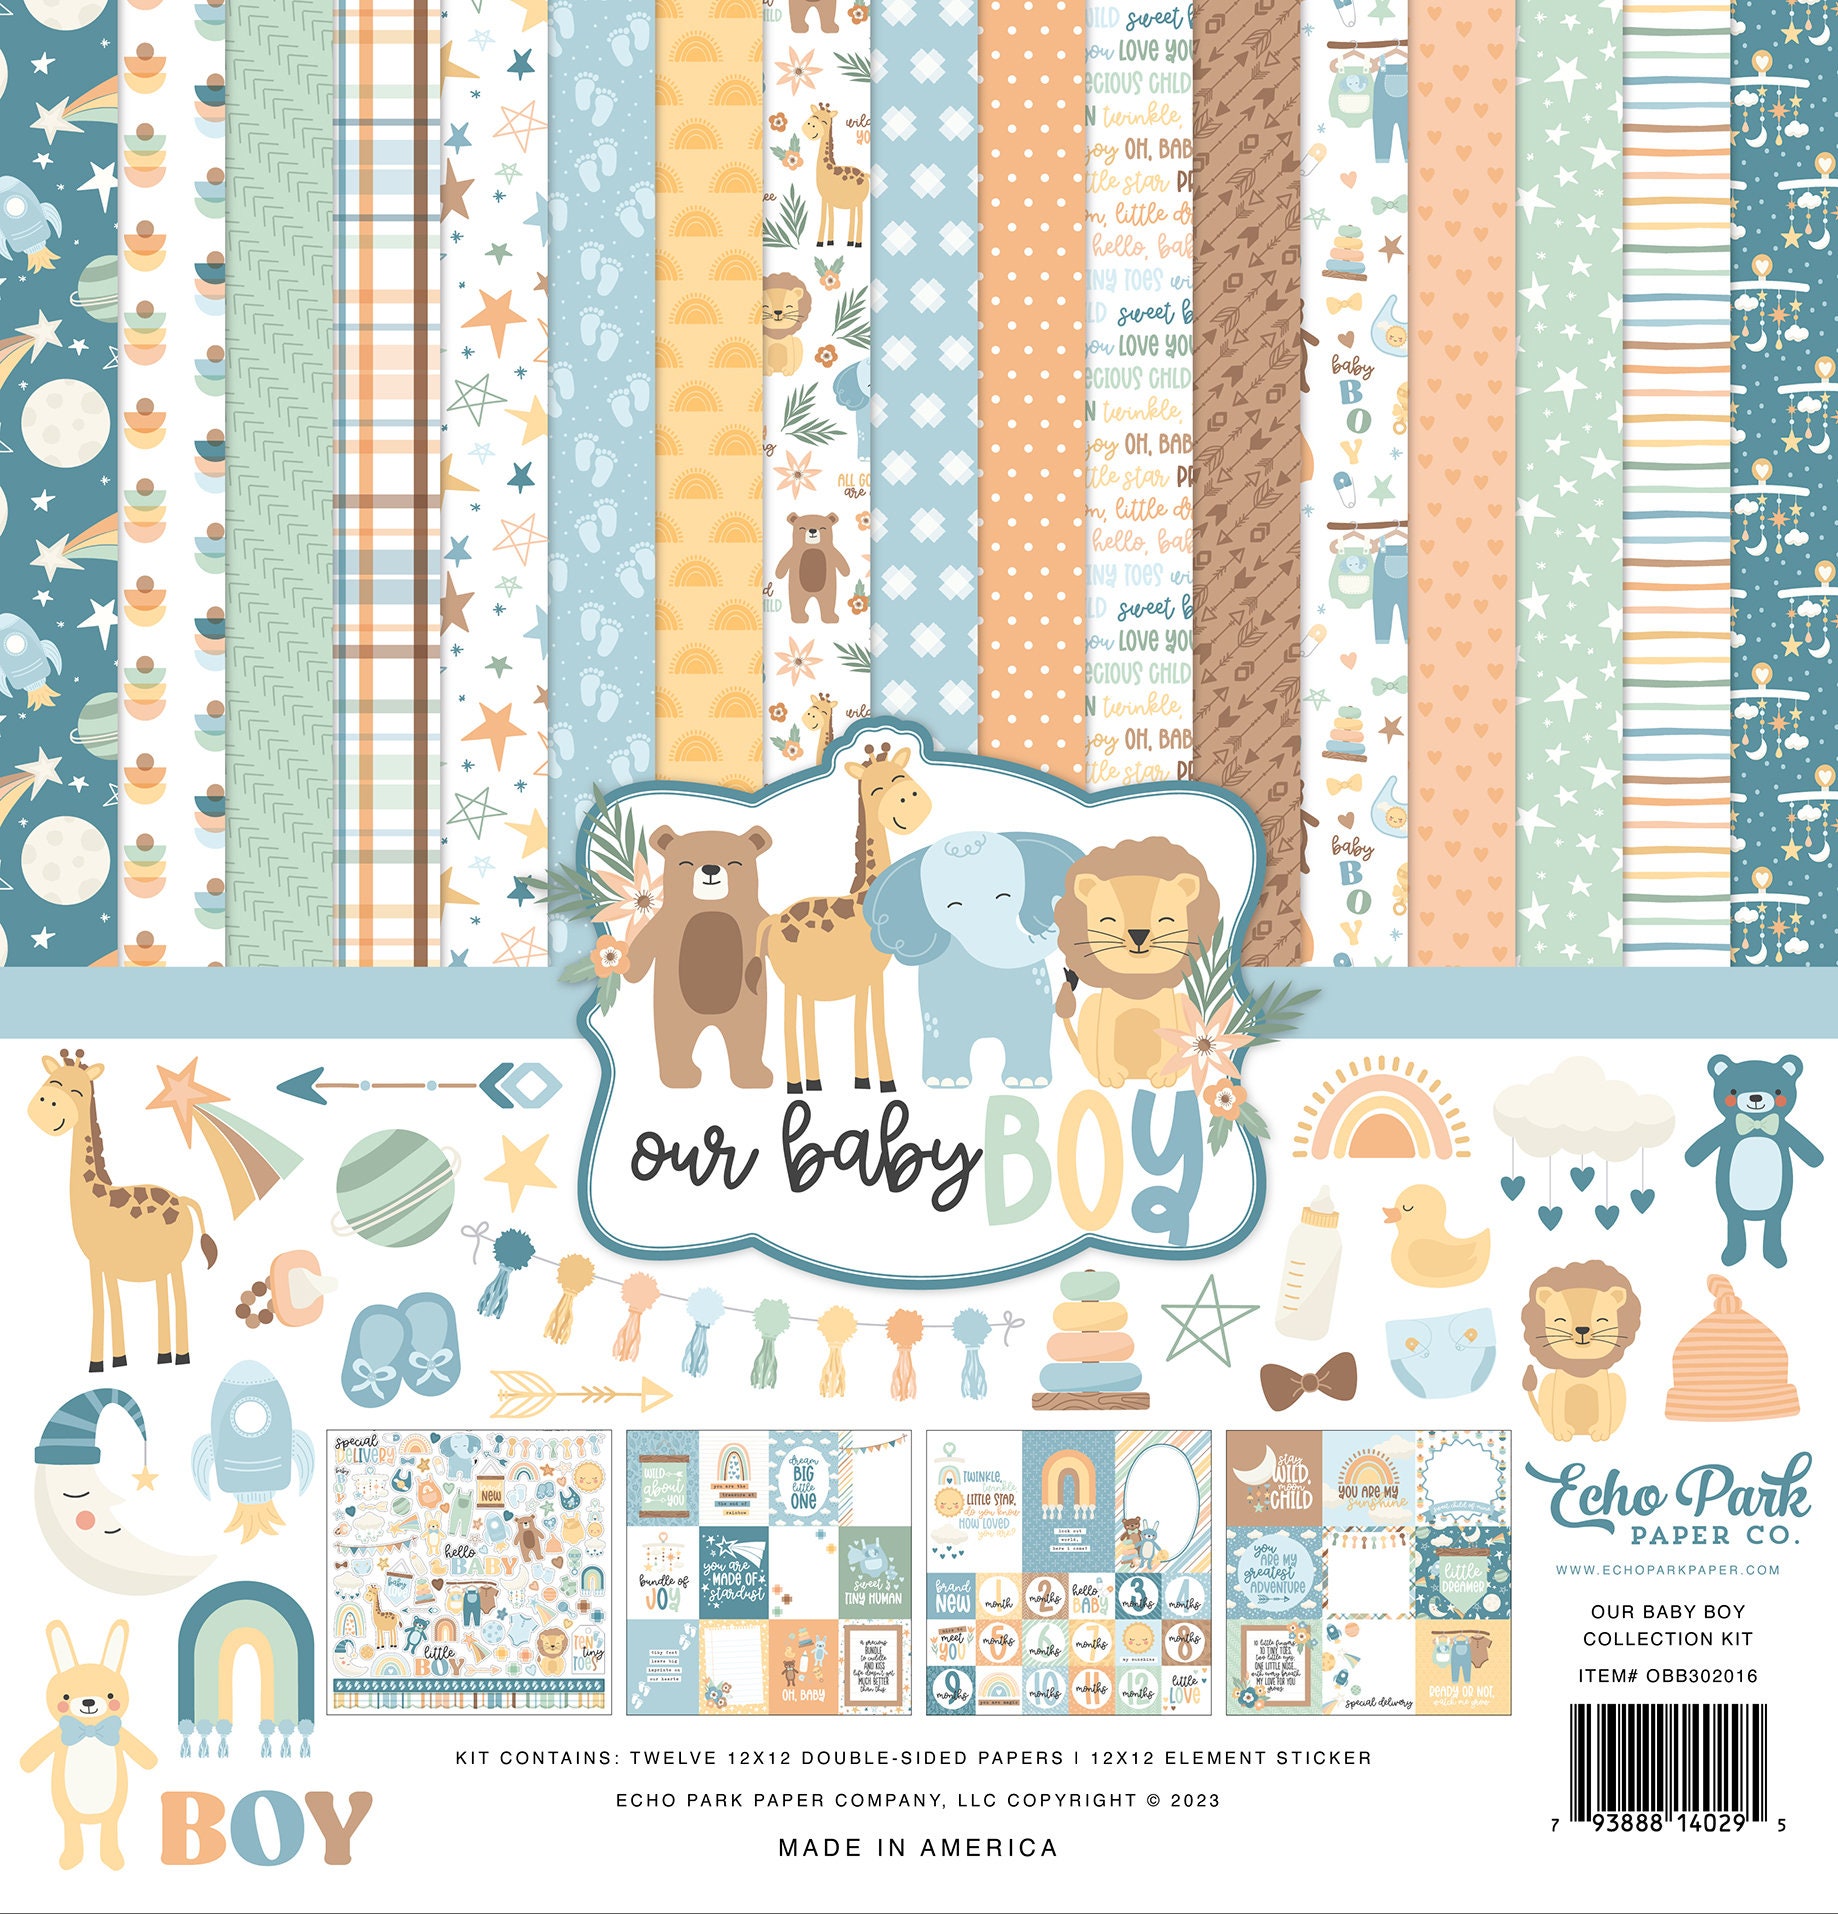 Dress My Crafts Single-Sided Paper Pad 12x12 24/Pkg - Precious Baby Boy, 12 Designs/2 Each